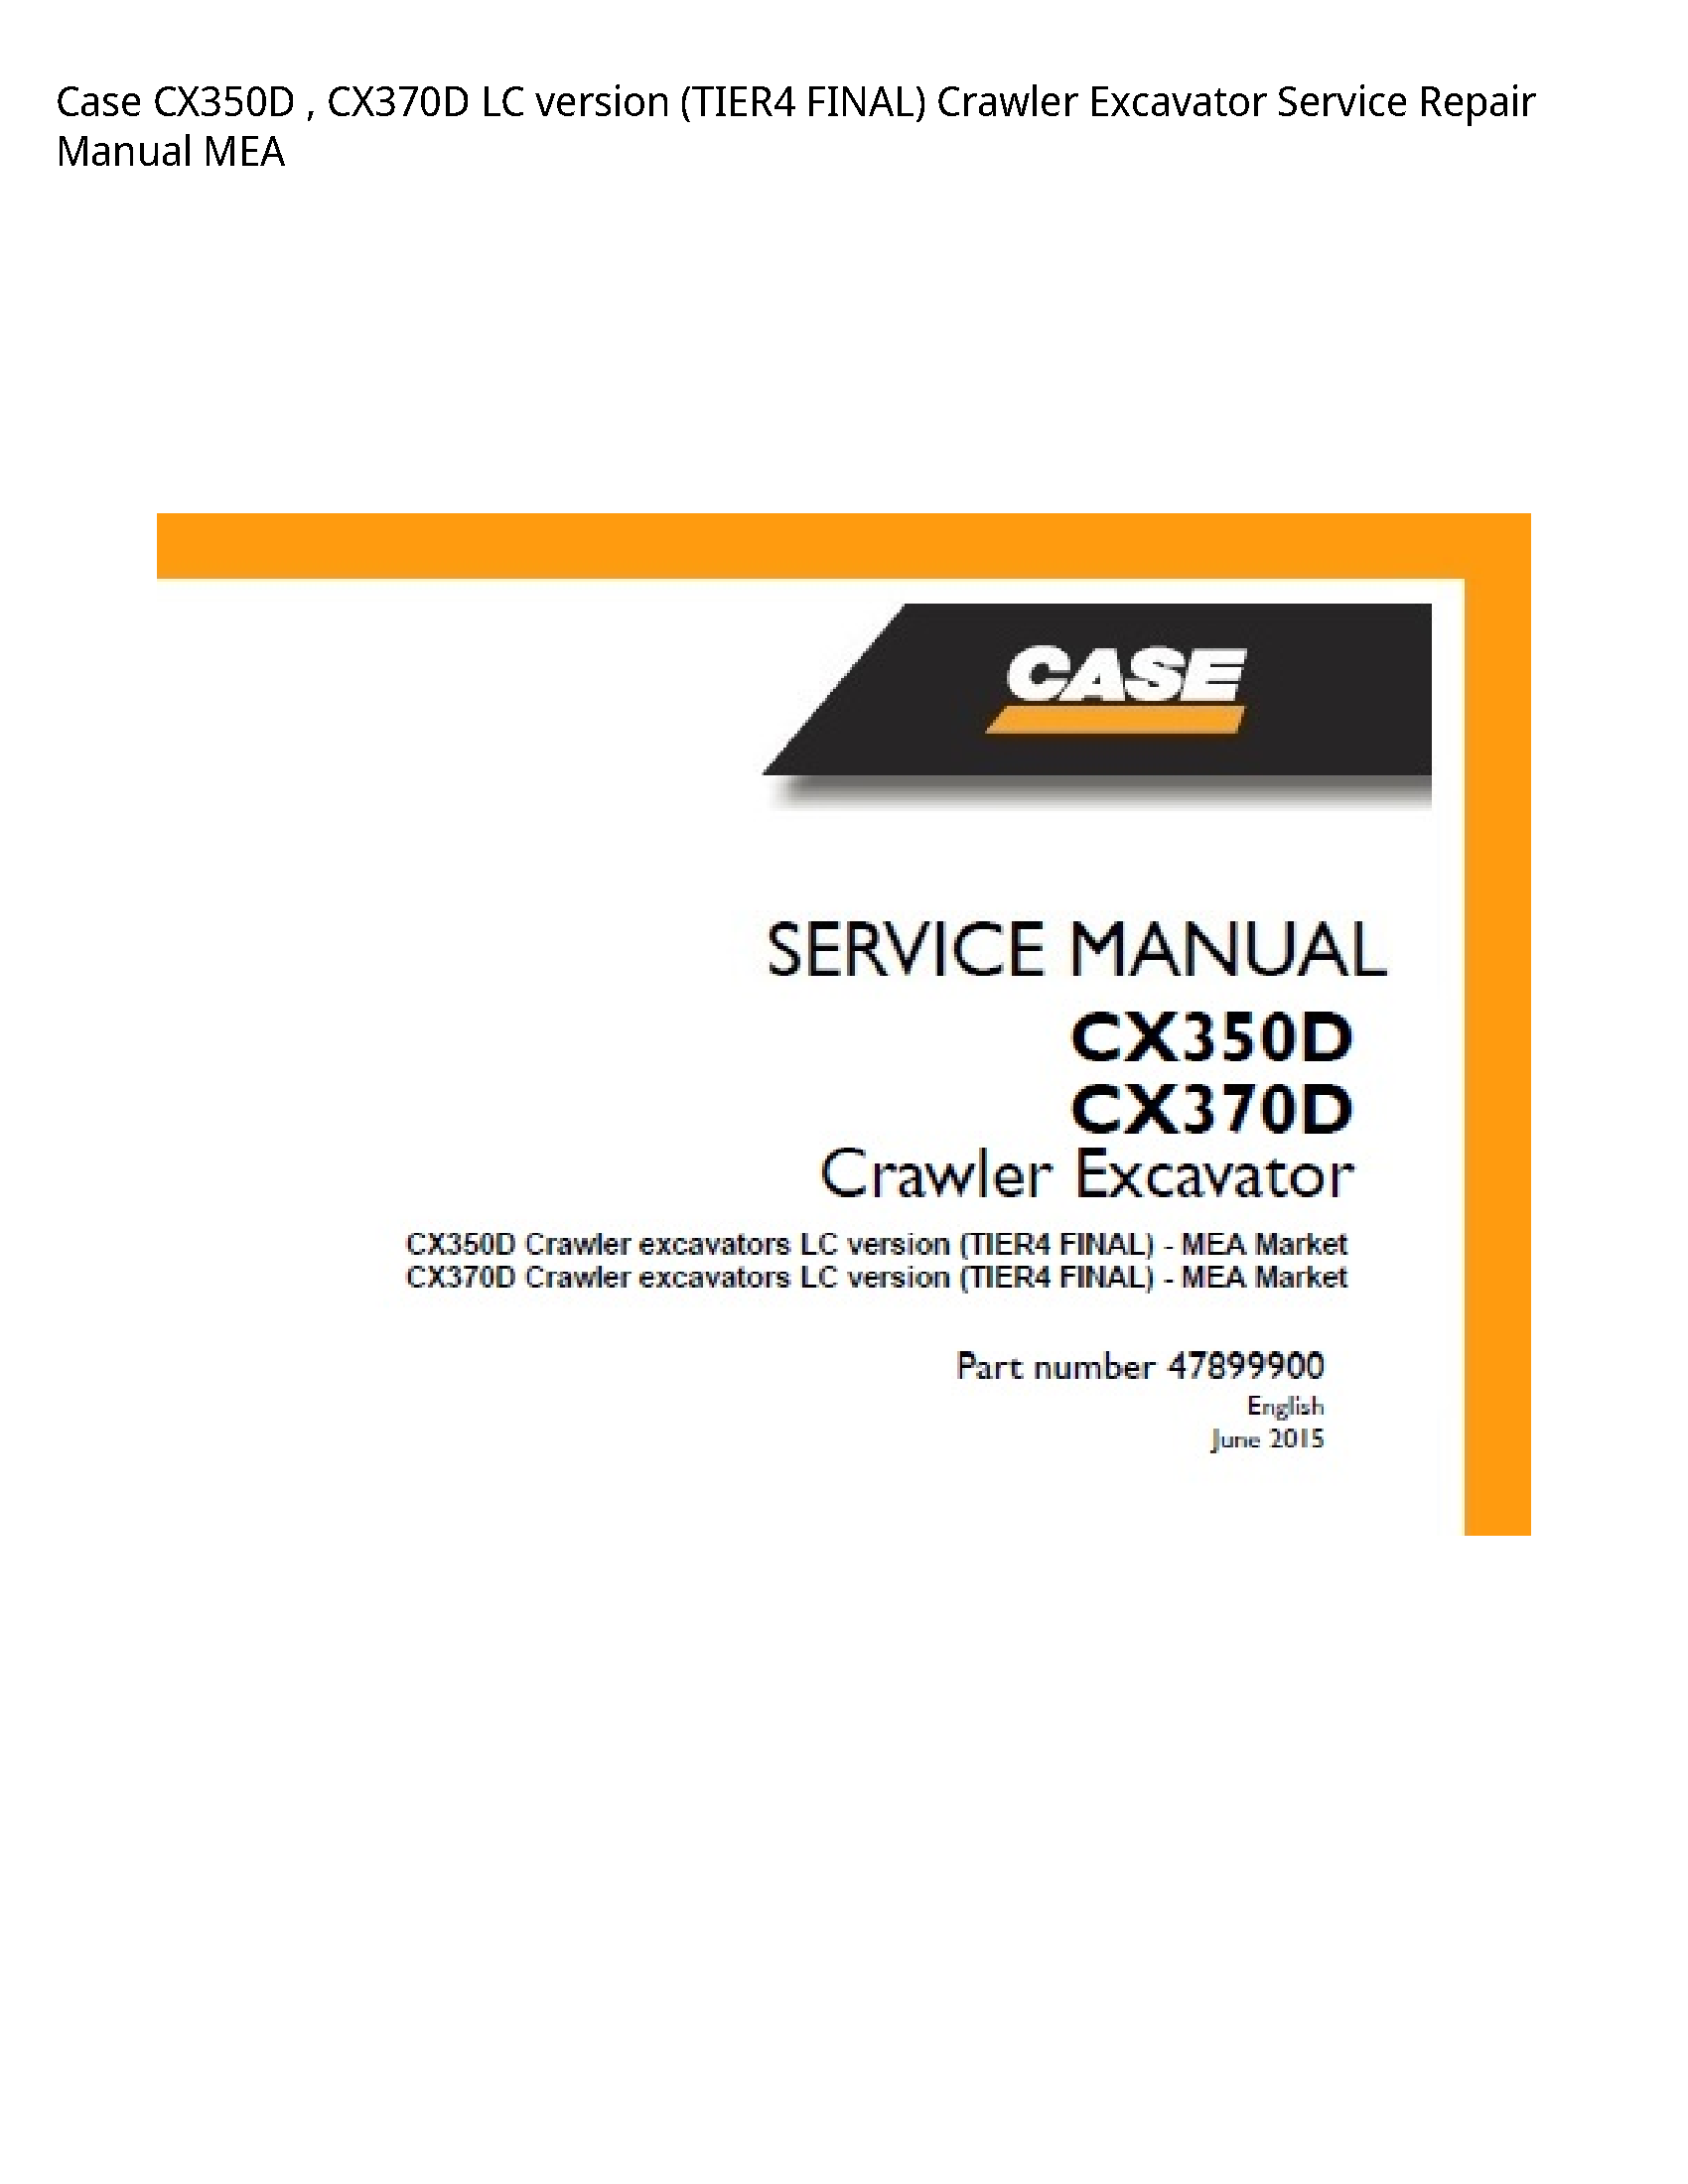 Case/Case IH CX350D LC version FINAL) Crawler Excavator manual